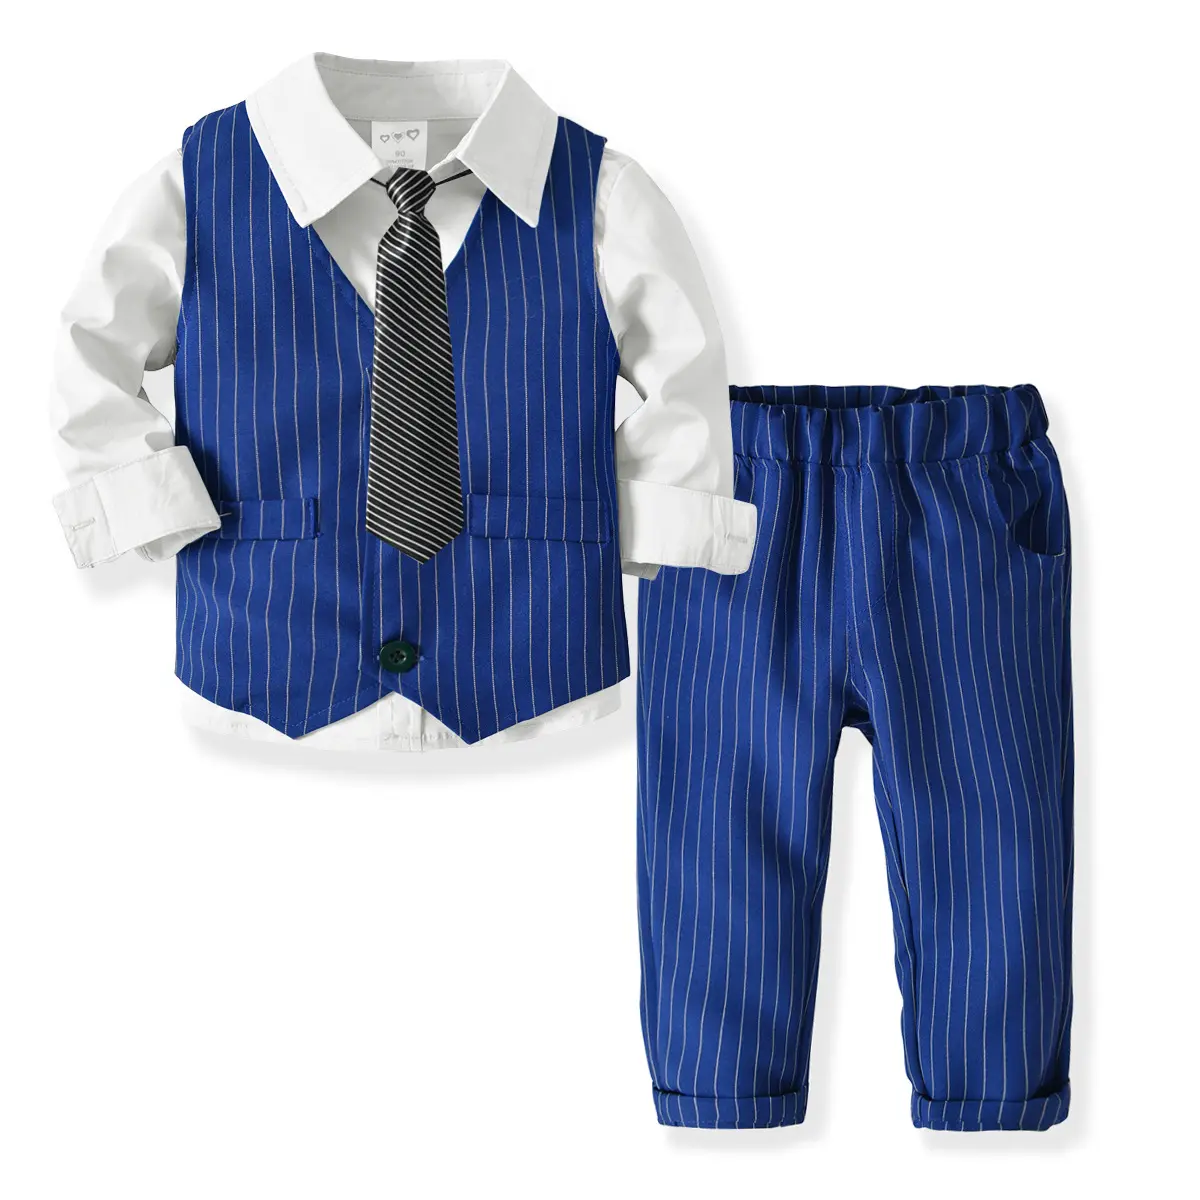 Setelan Baju Bayi Anak-anak, Baju Lengan Panjang + Celana + Rompi 3 Buah/Set Pakaian Balita Laki-laki 20A919